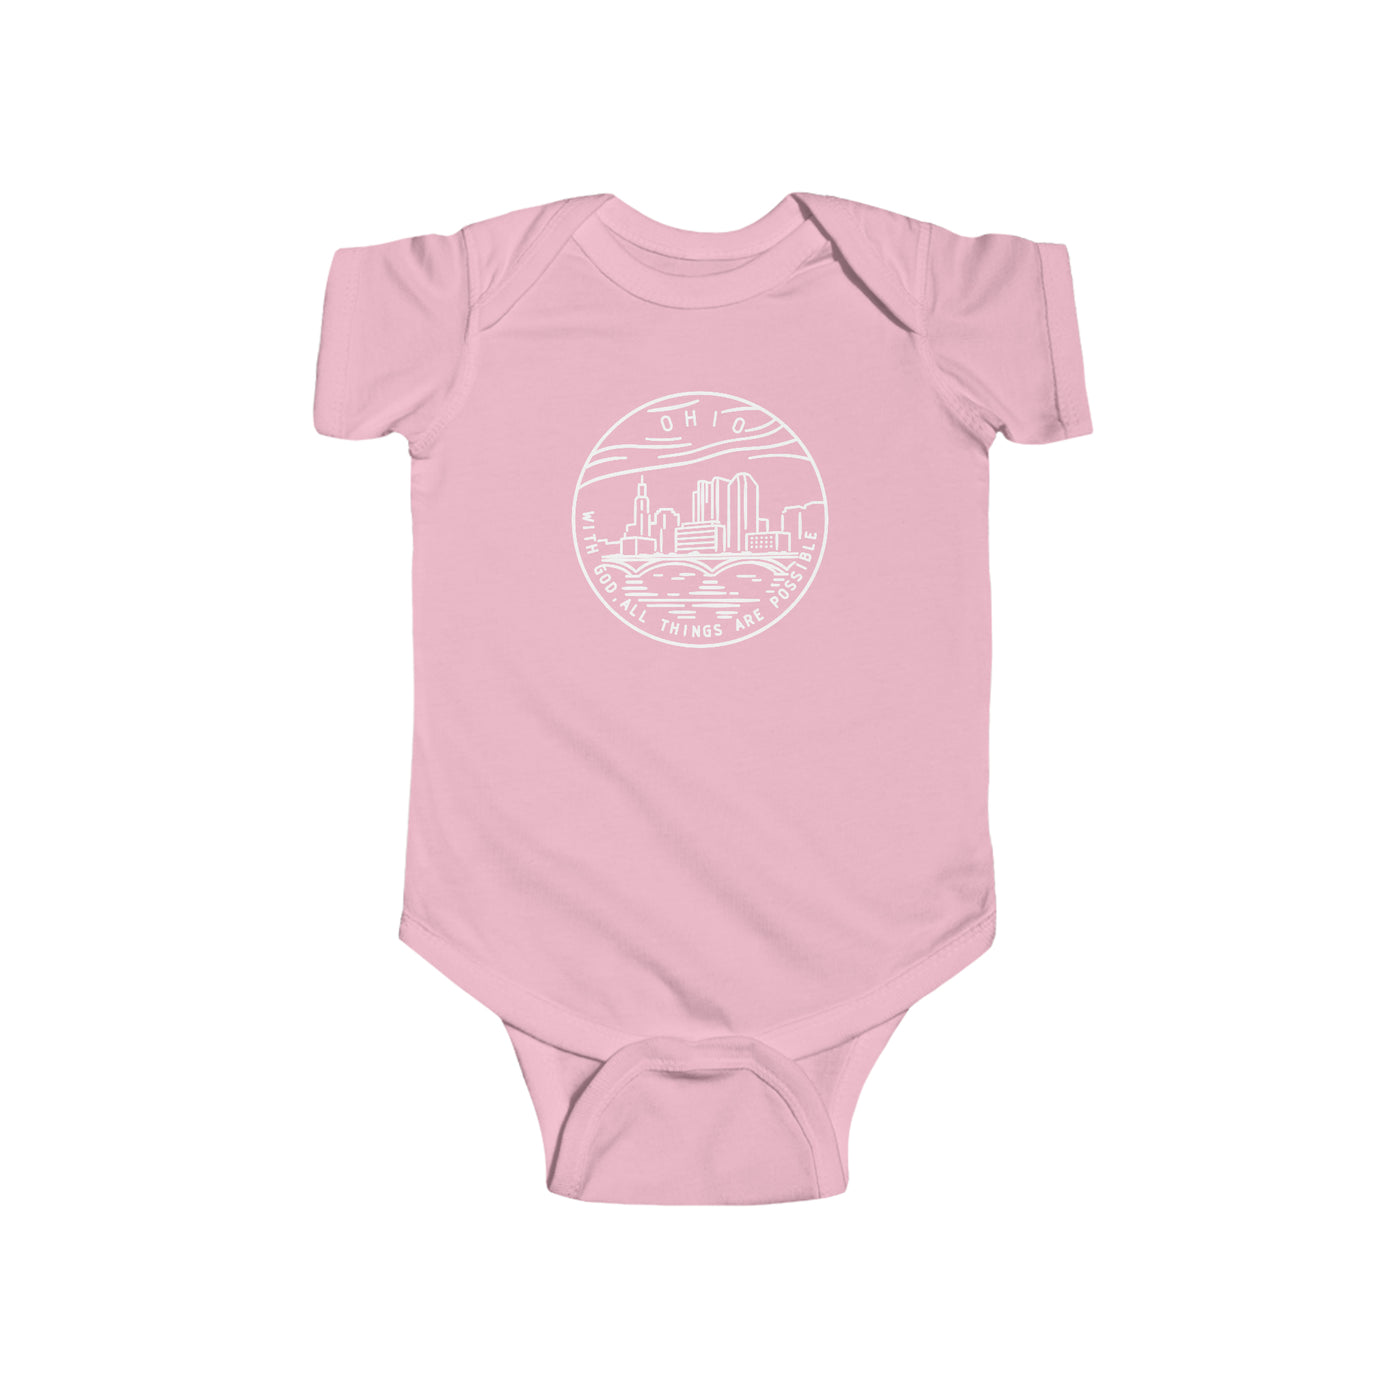 Ohio State Motto Baby Bodysuit